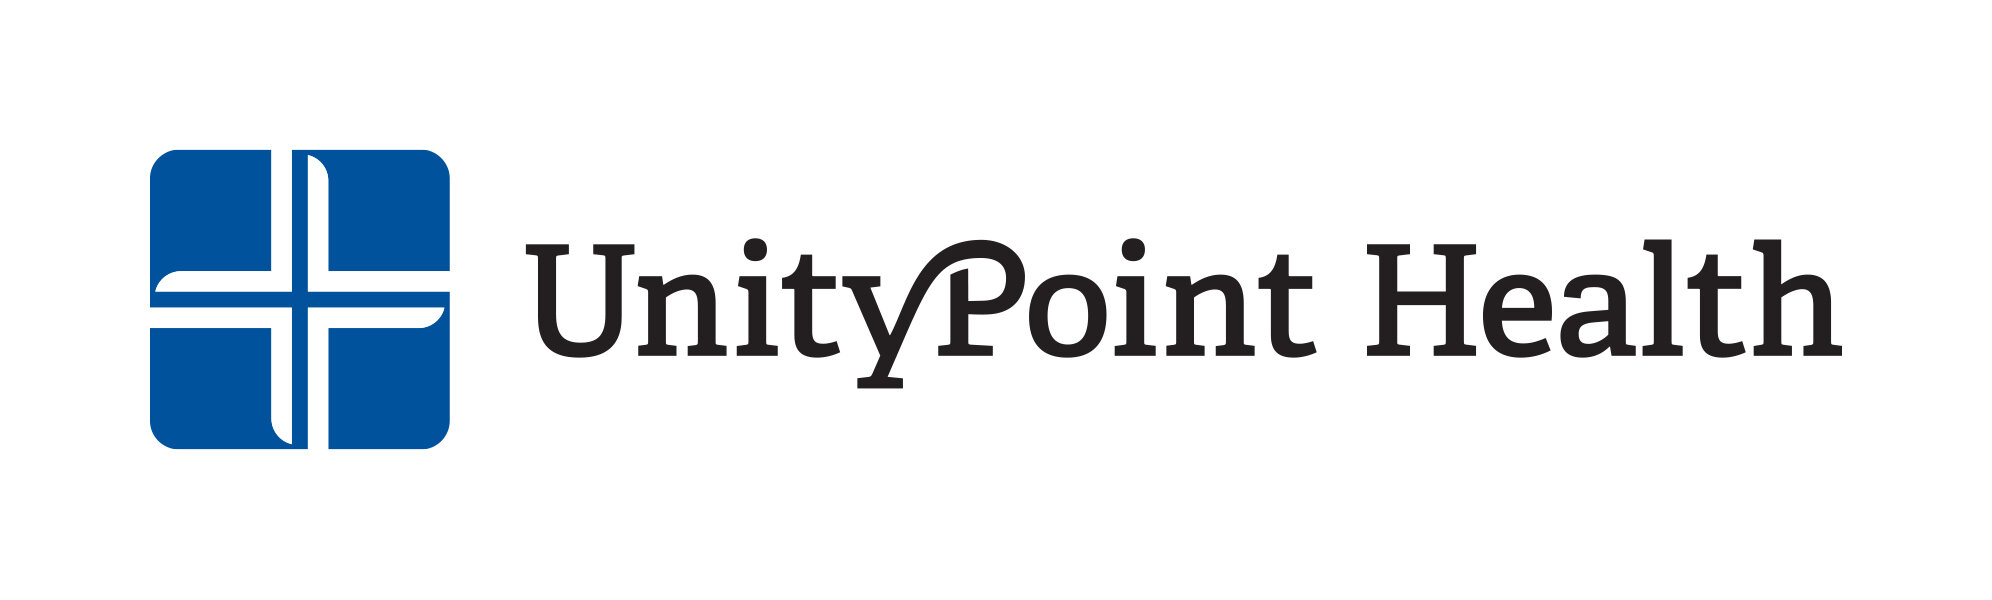 UnityPointHealth (1).jpg